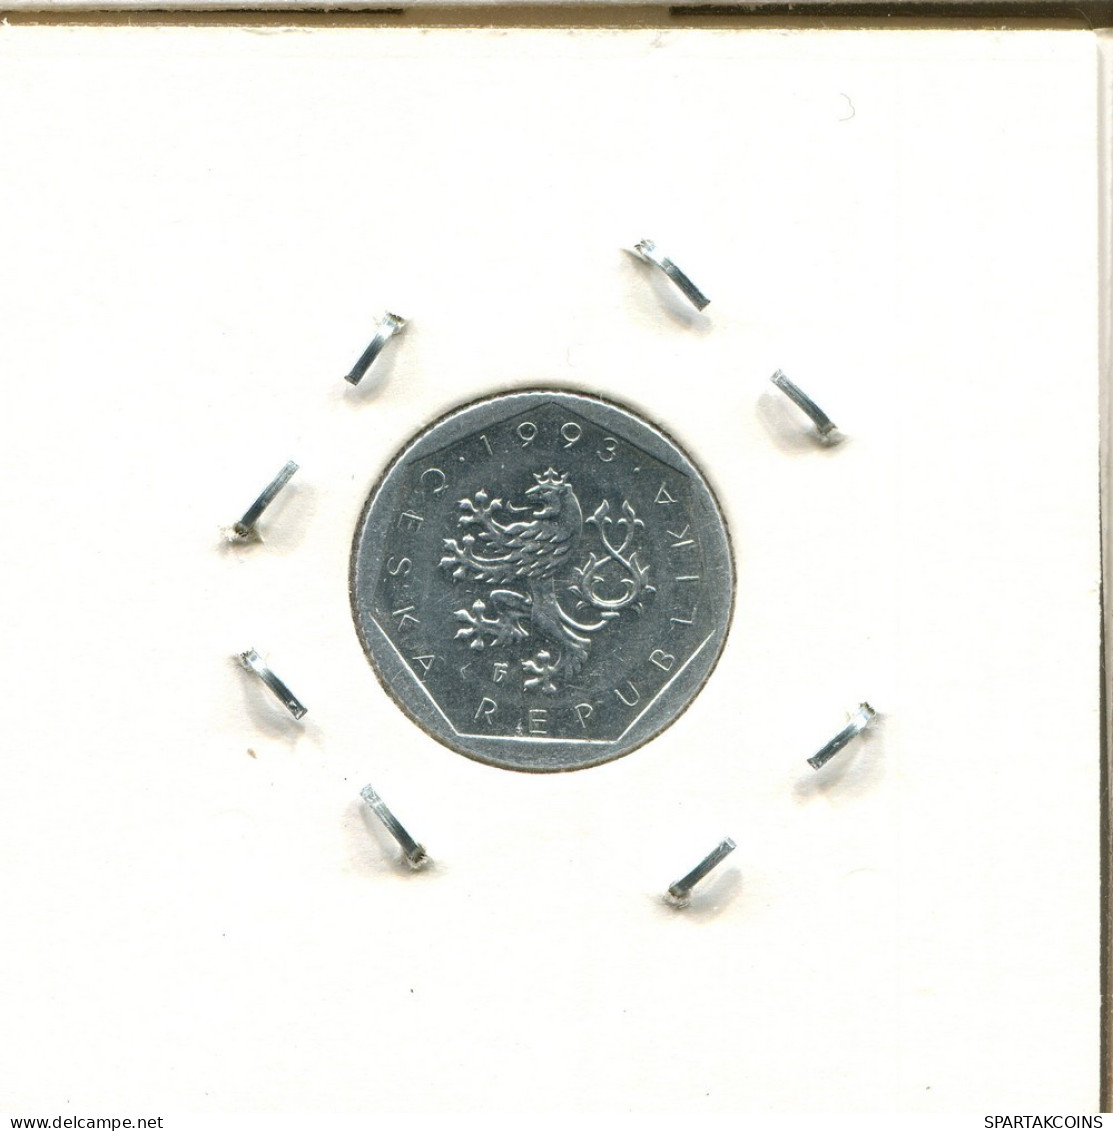 20 HALERU 1993 CZECHOSLOVAKIA Coin #AS549.U.A - Tchécoslovaquie